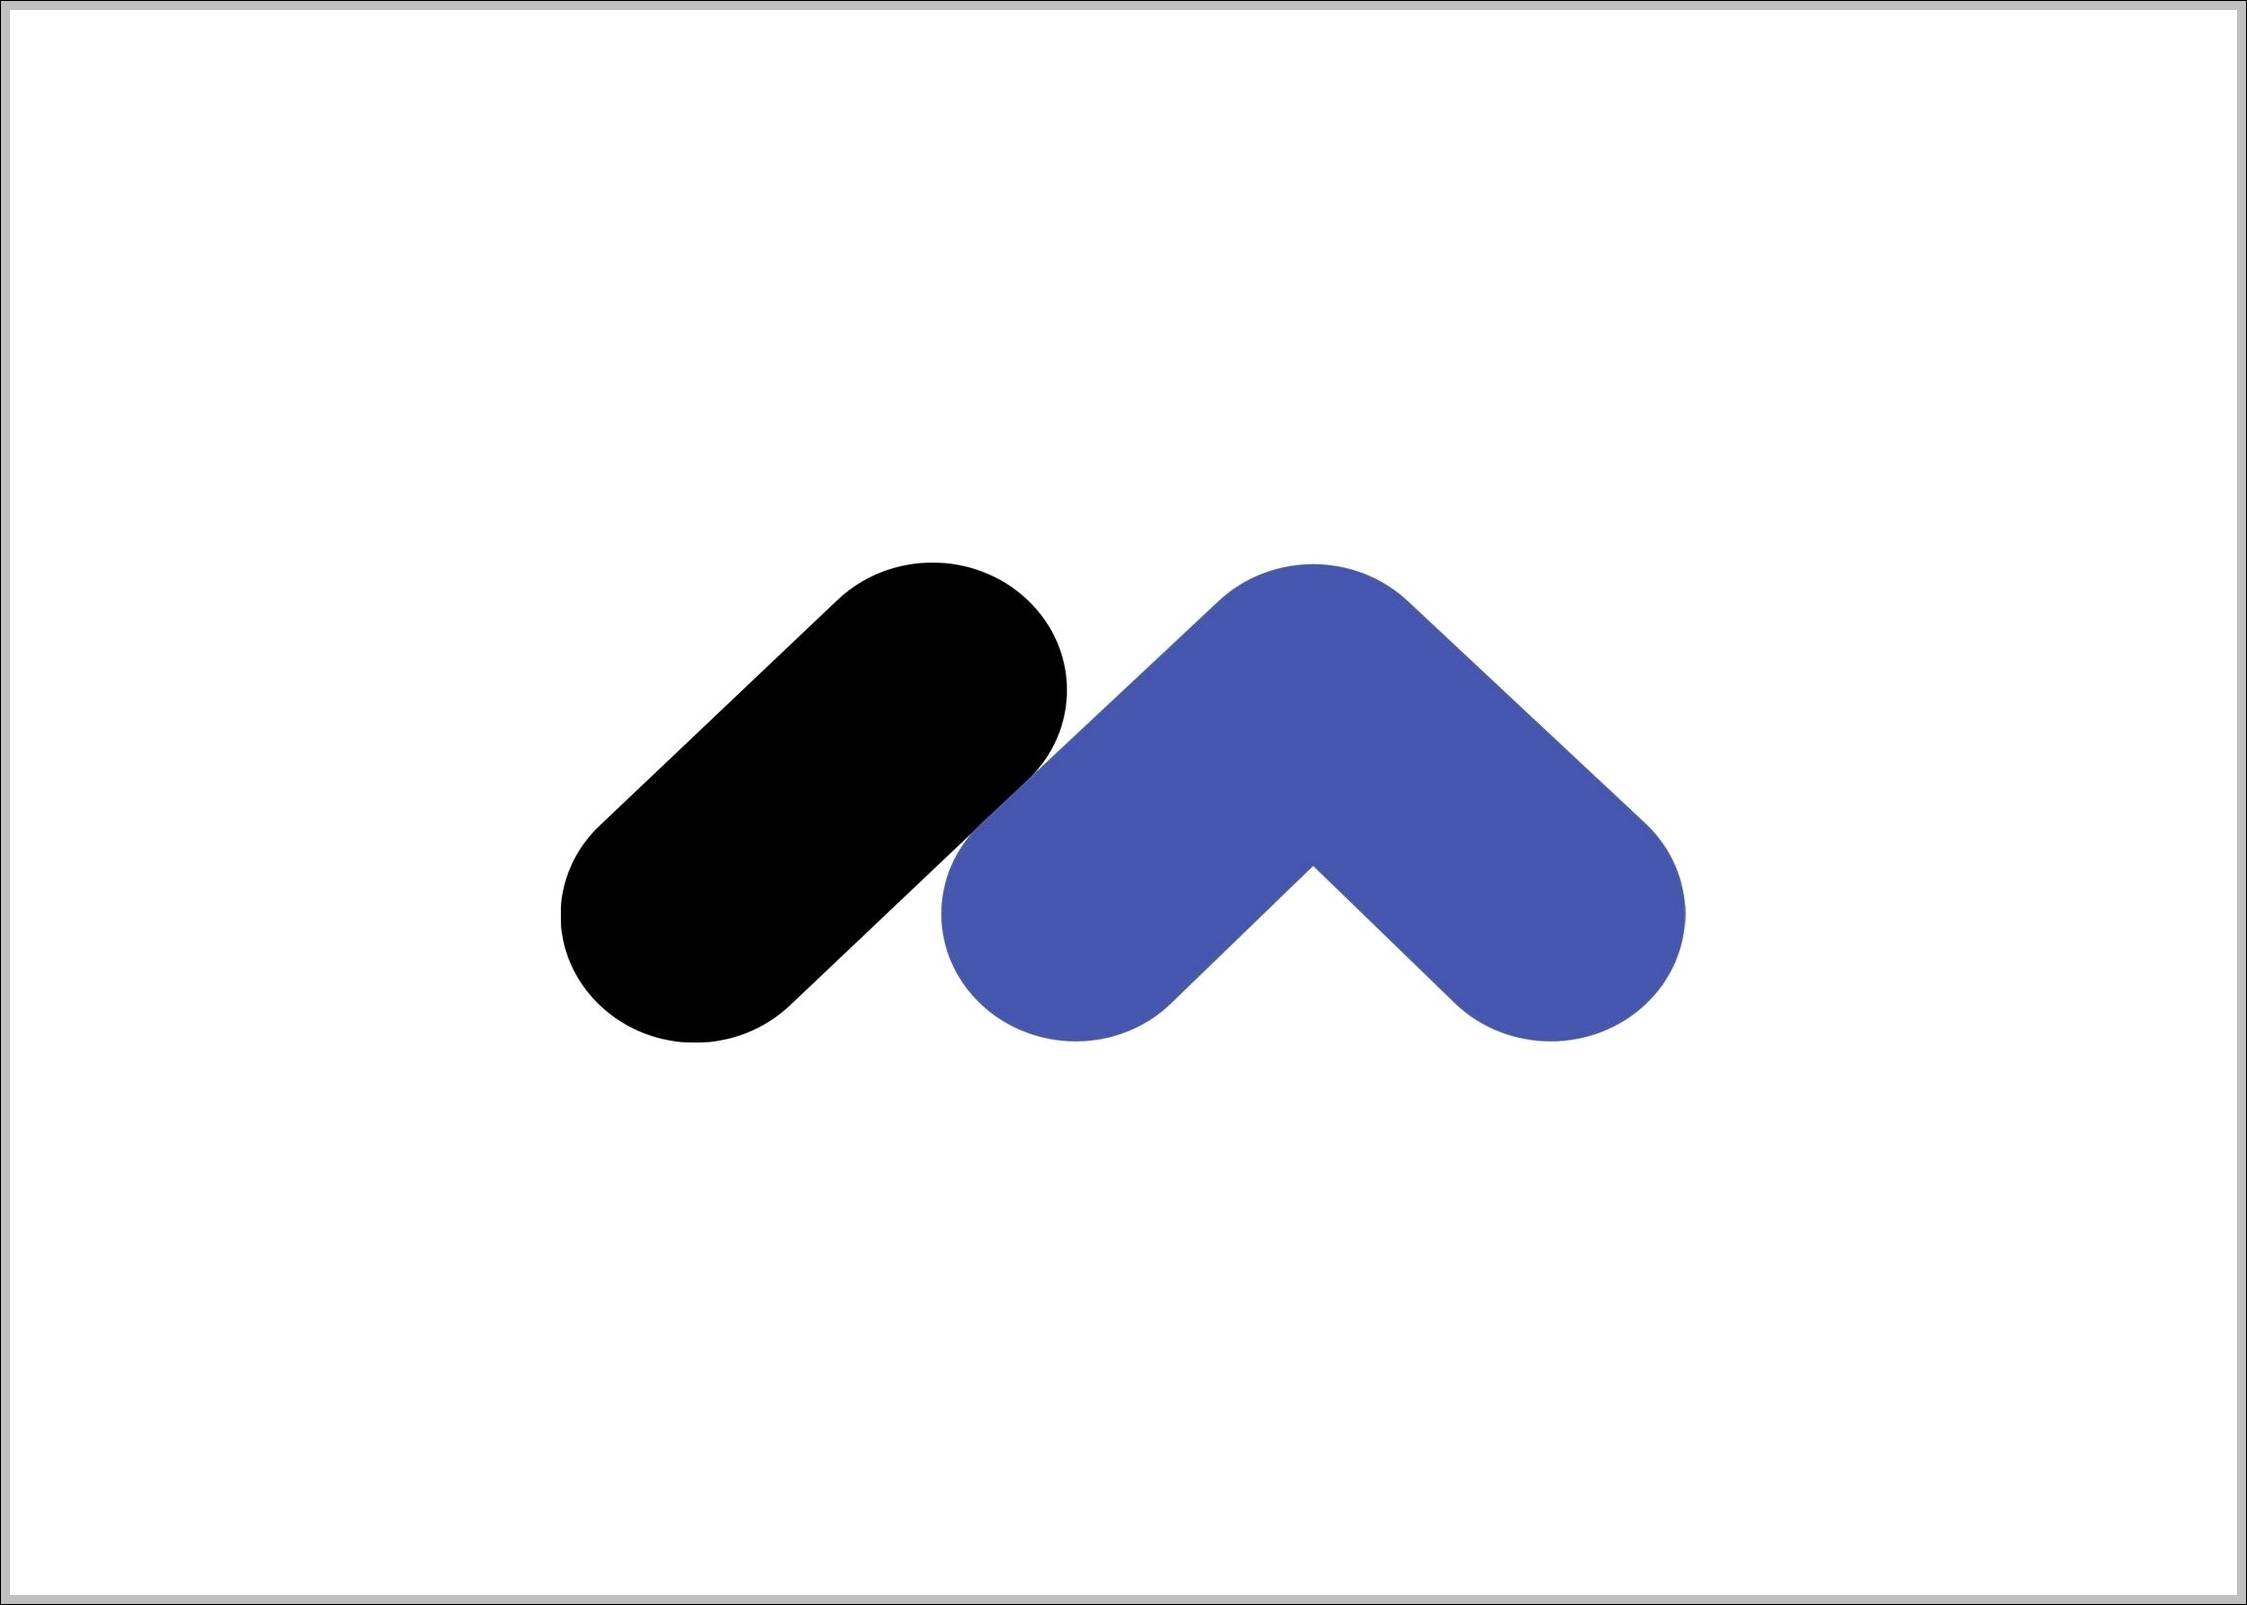 Macromedia logo